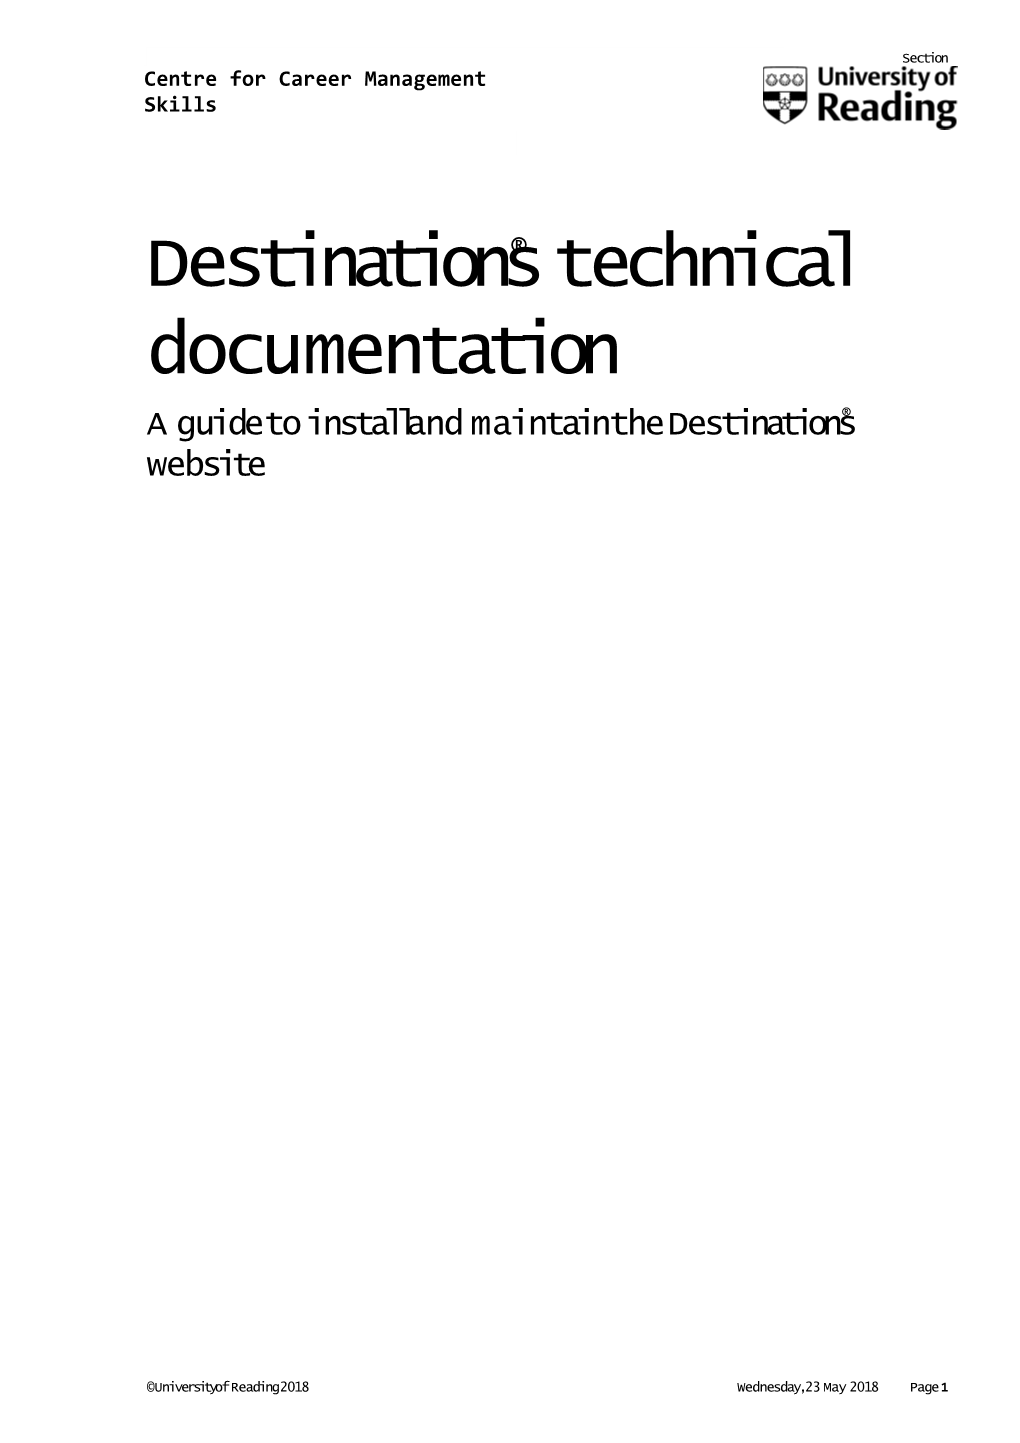 Destinations Technical Documentation